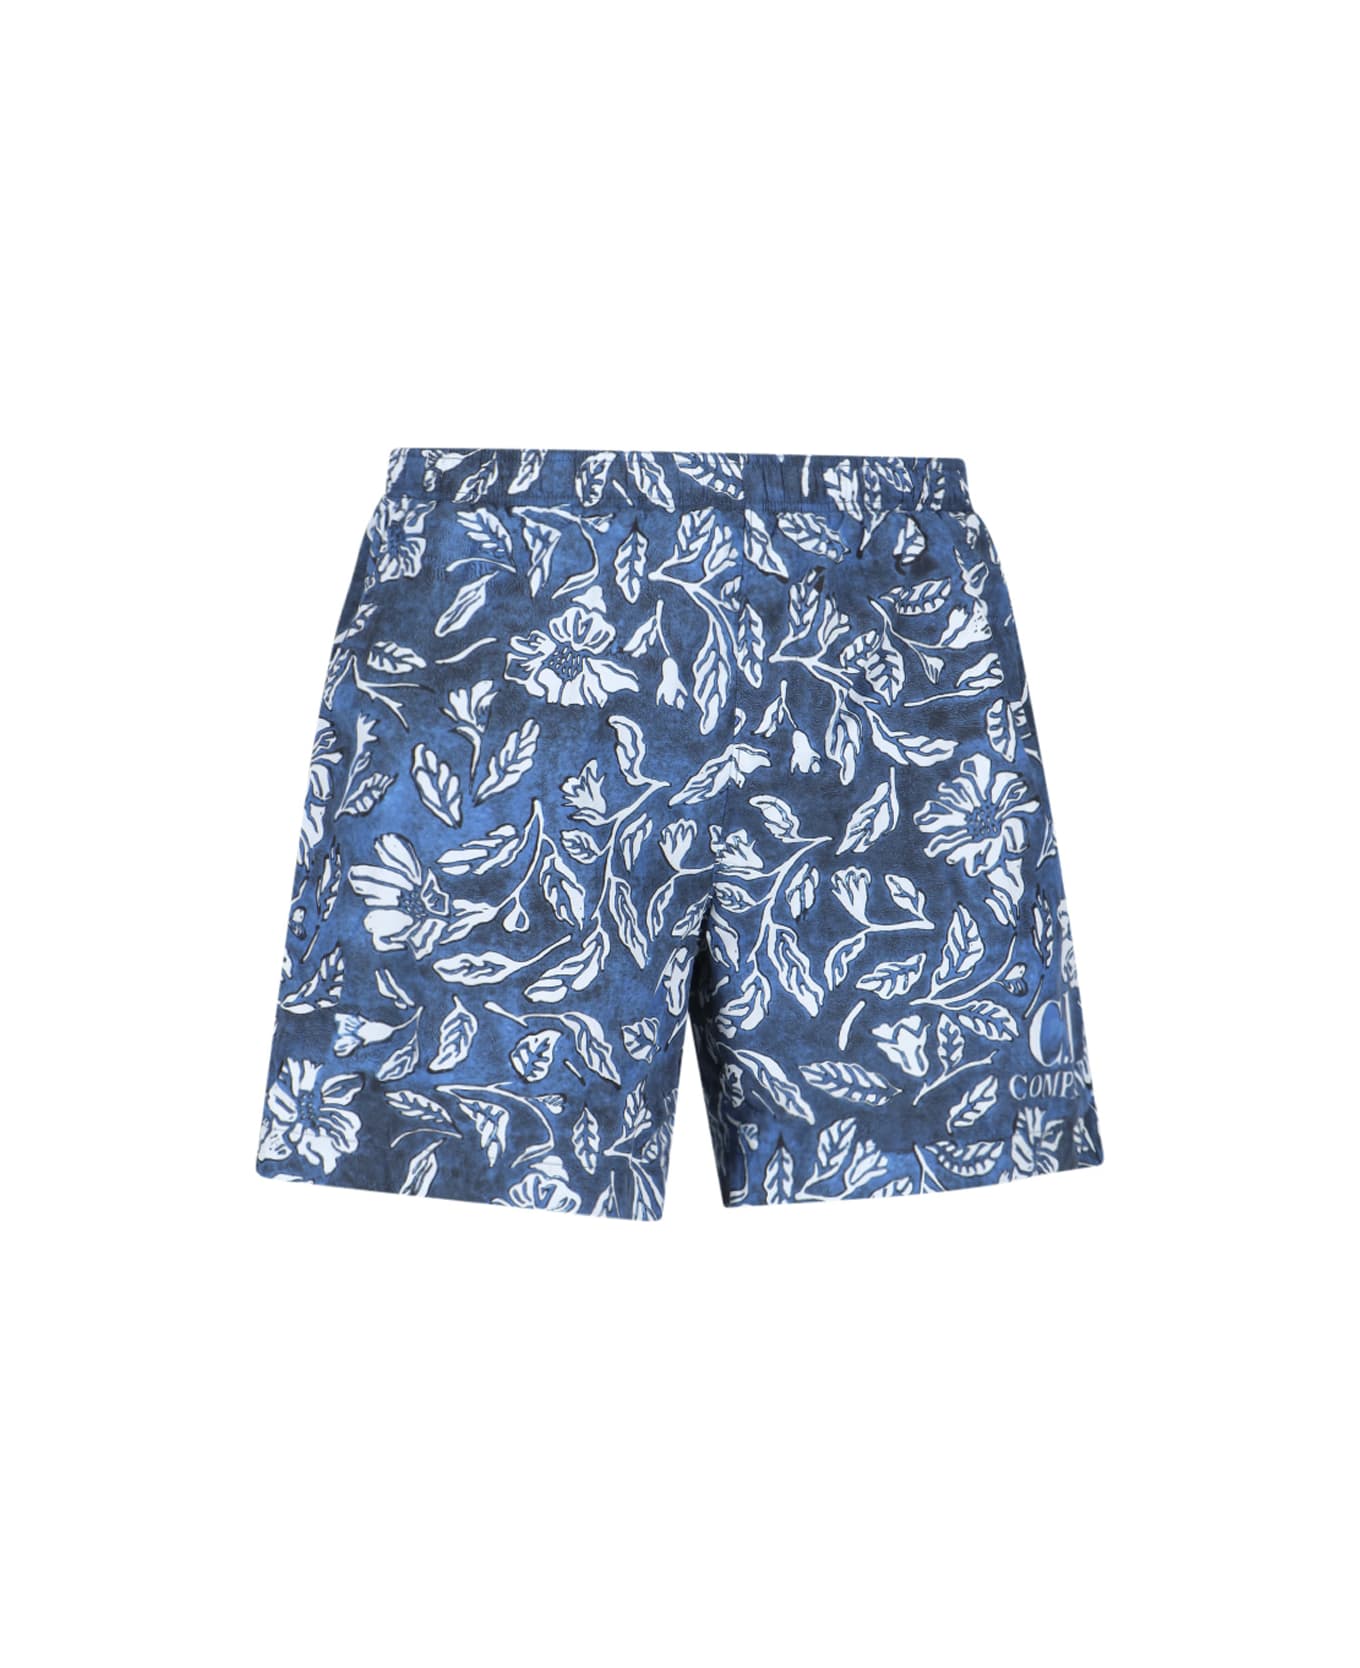 C.P. Company Floral Print Swimming Shorts - Medieval Blue スイムトランクス